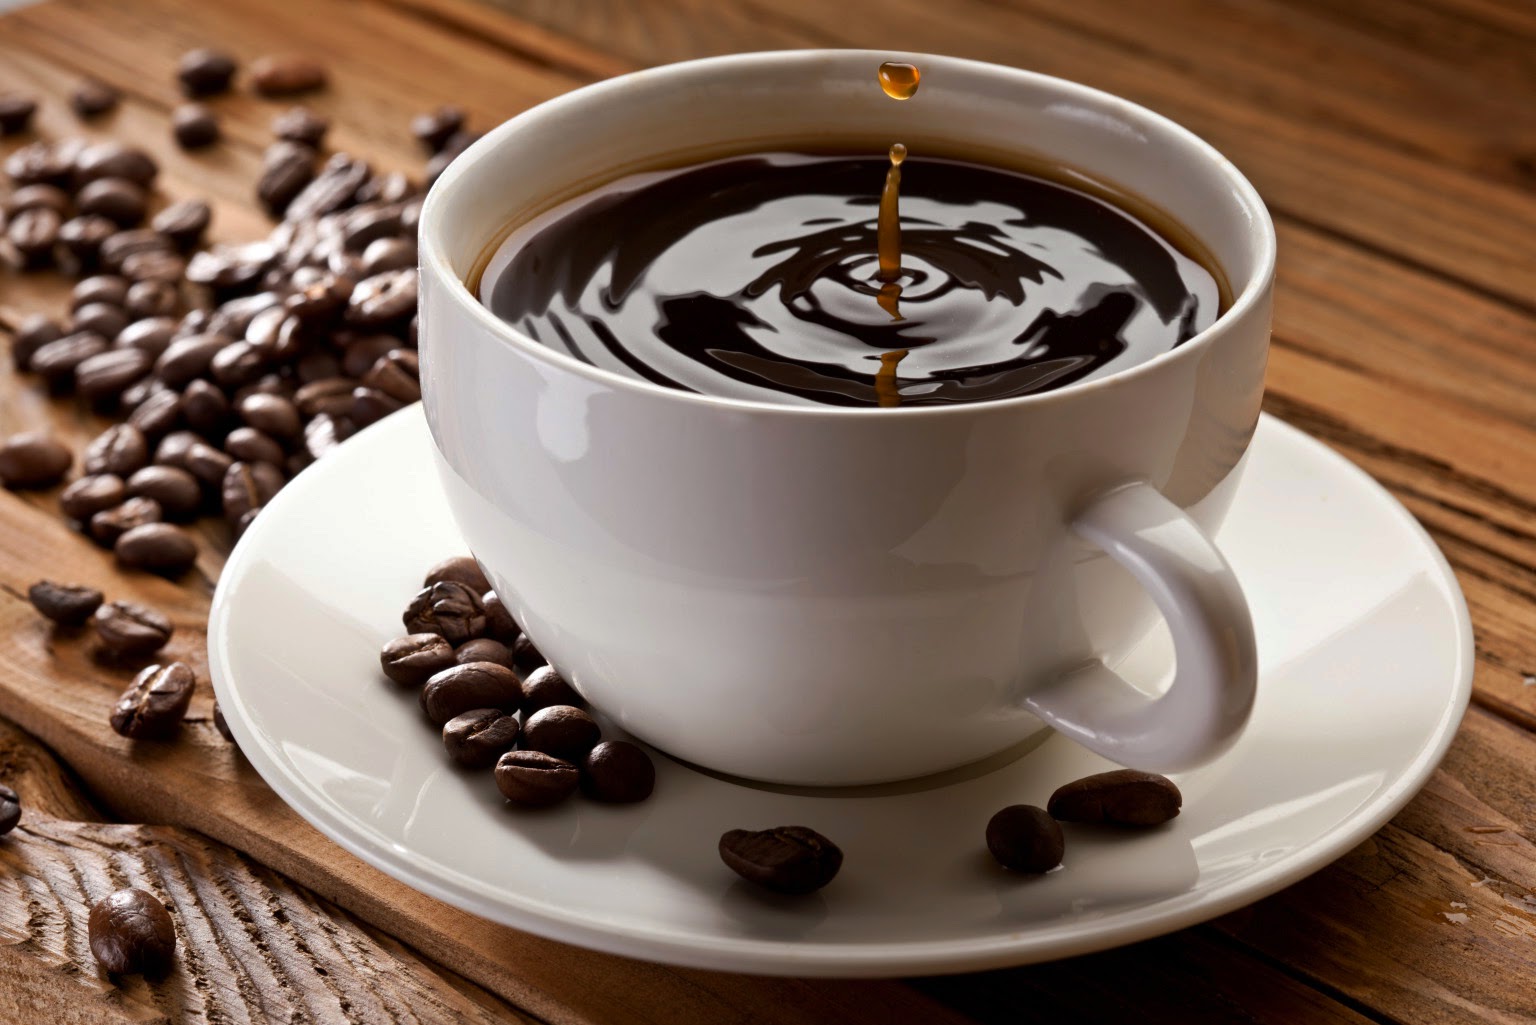 Coffee n chocolates :D n... other wonderful things in life